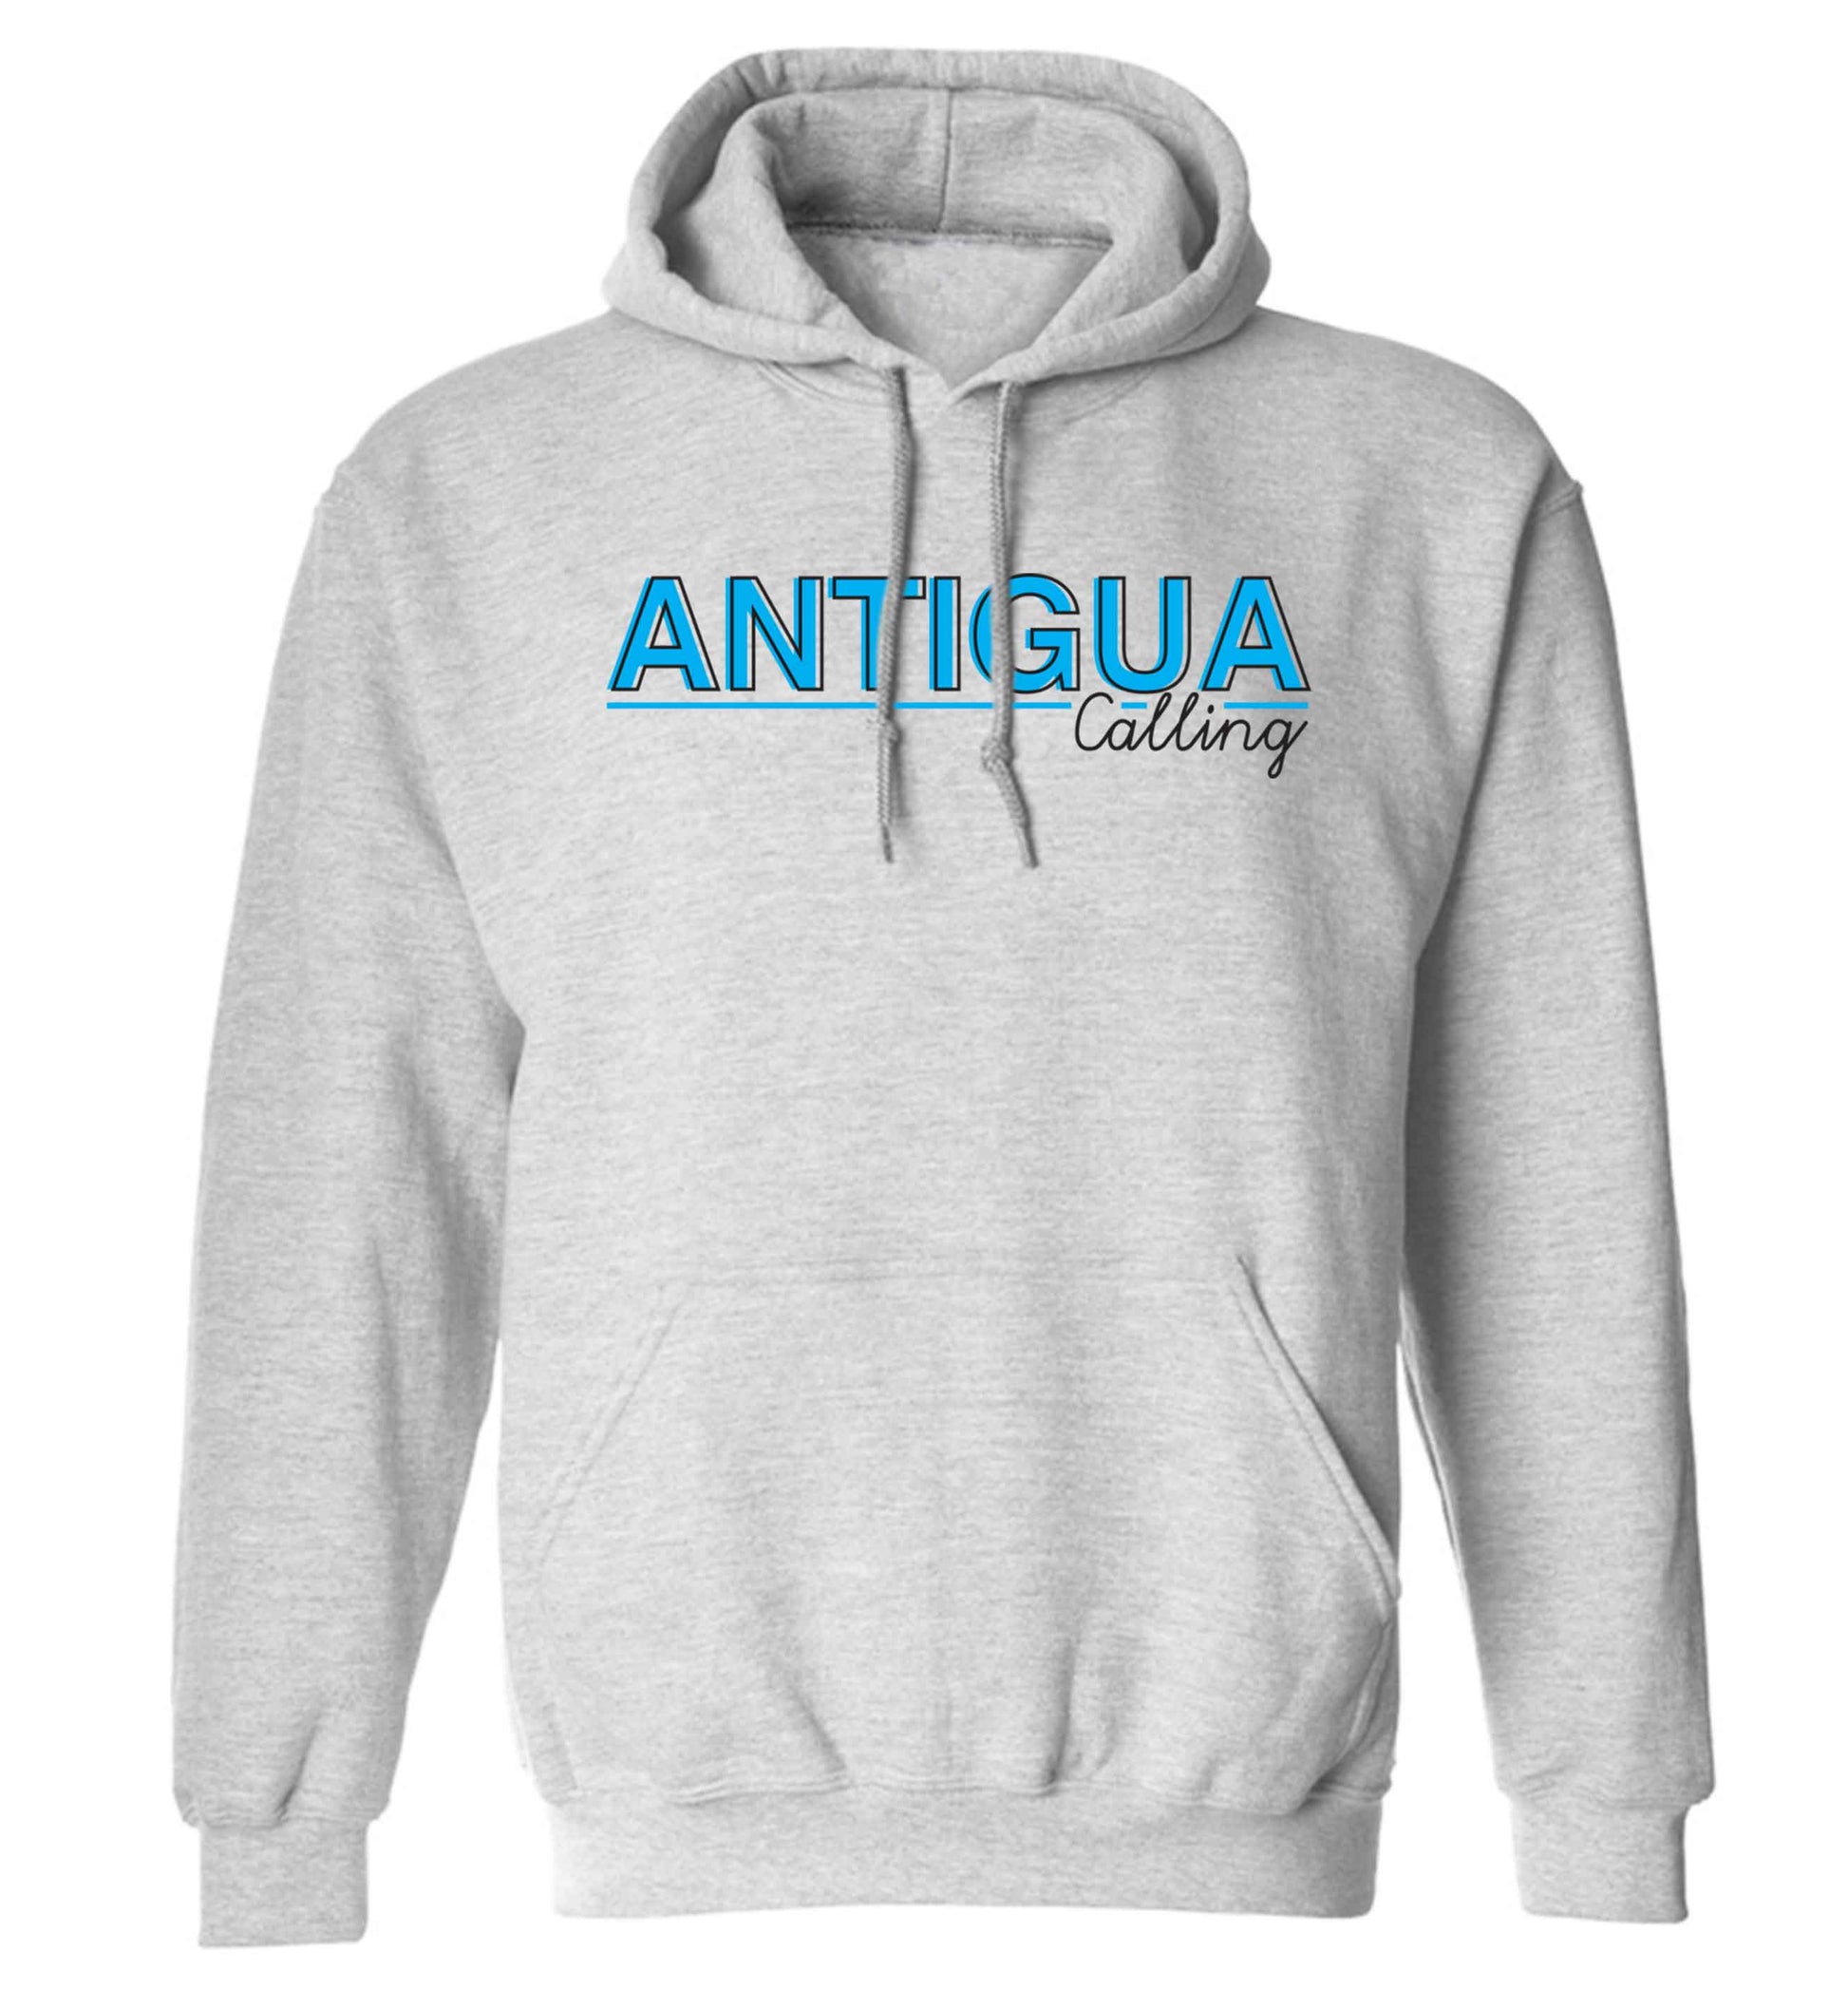 Antigua calling adults unisex grey hoodie 2XL